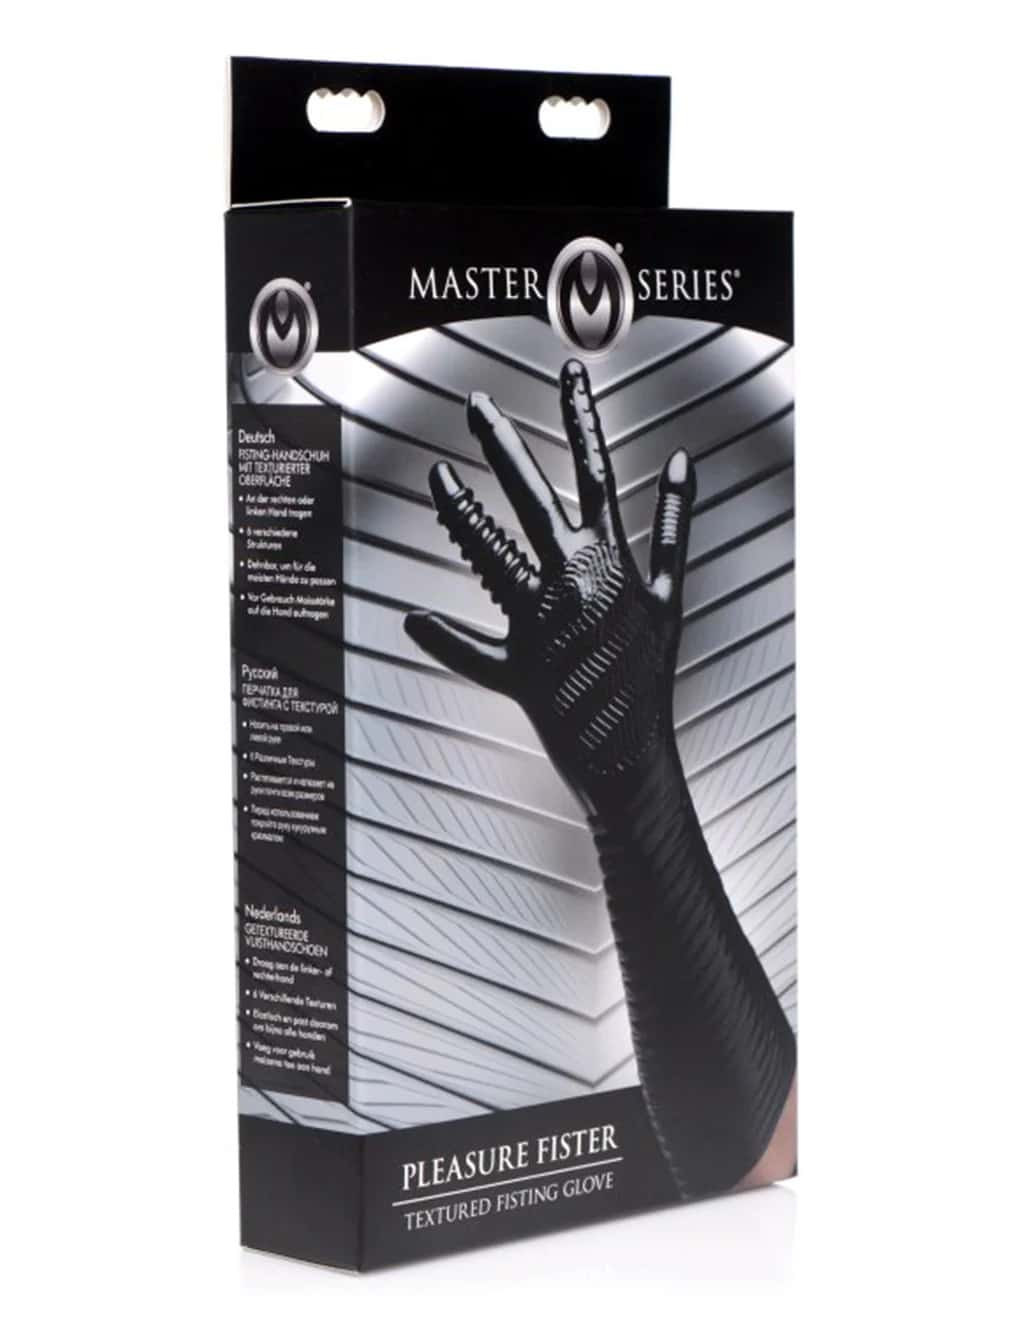 Master Series Pleasure Fister Textured Fisting Glove. Slide 3